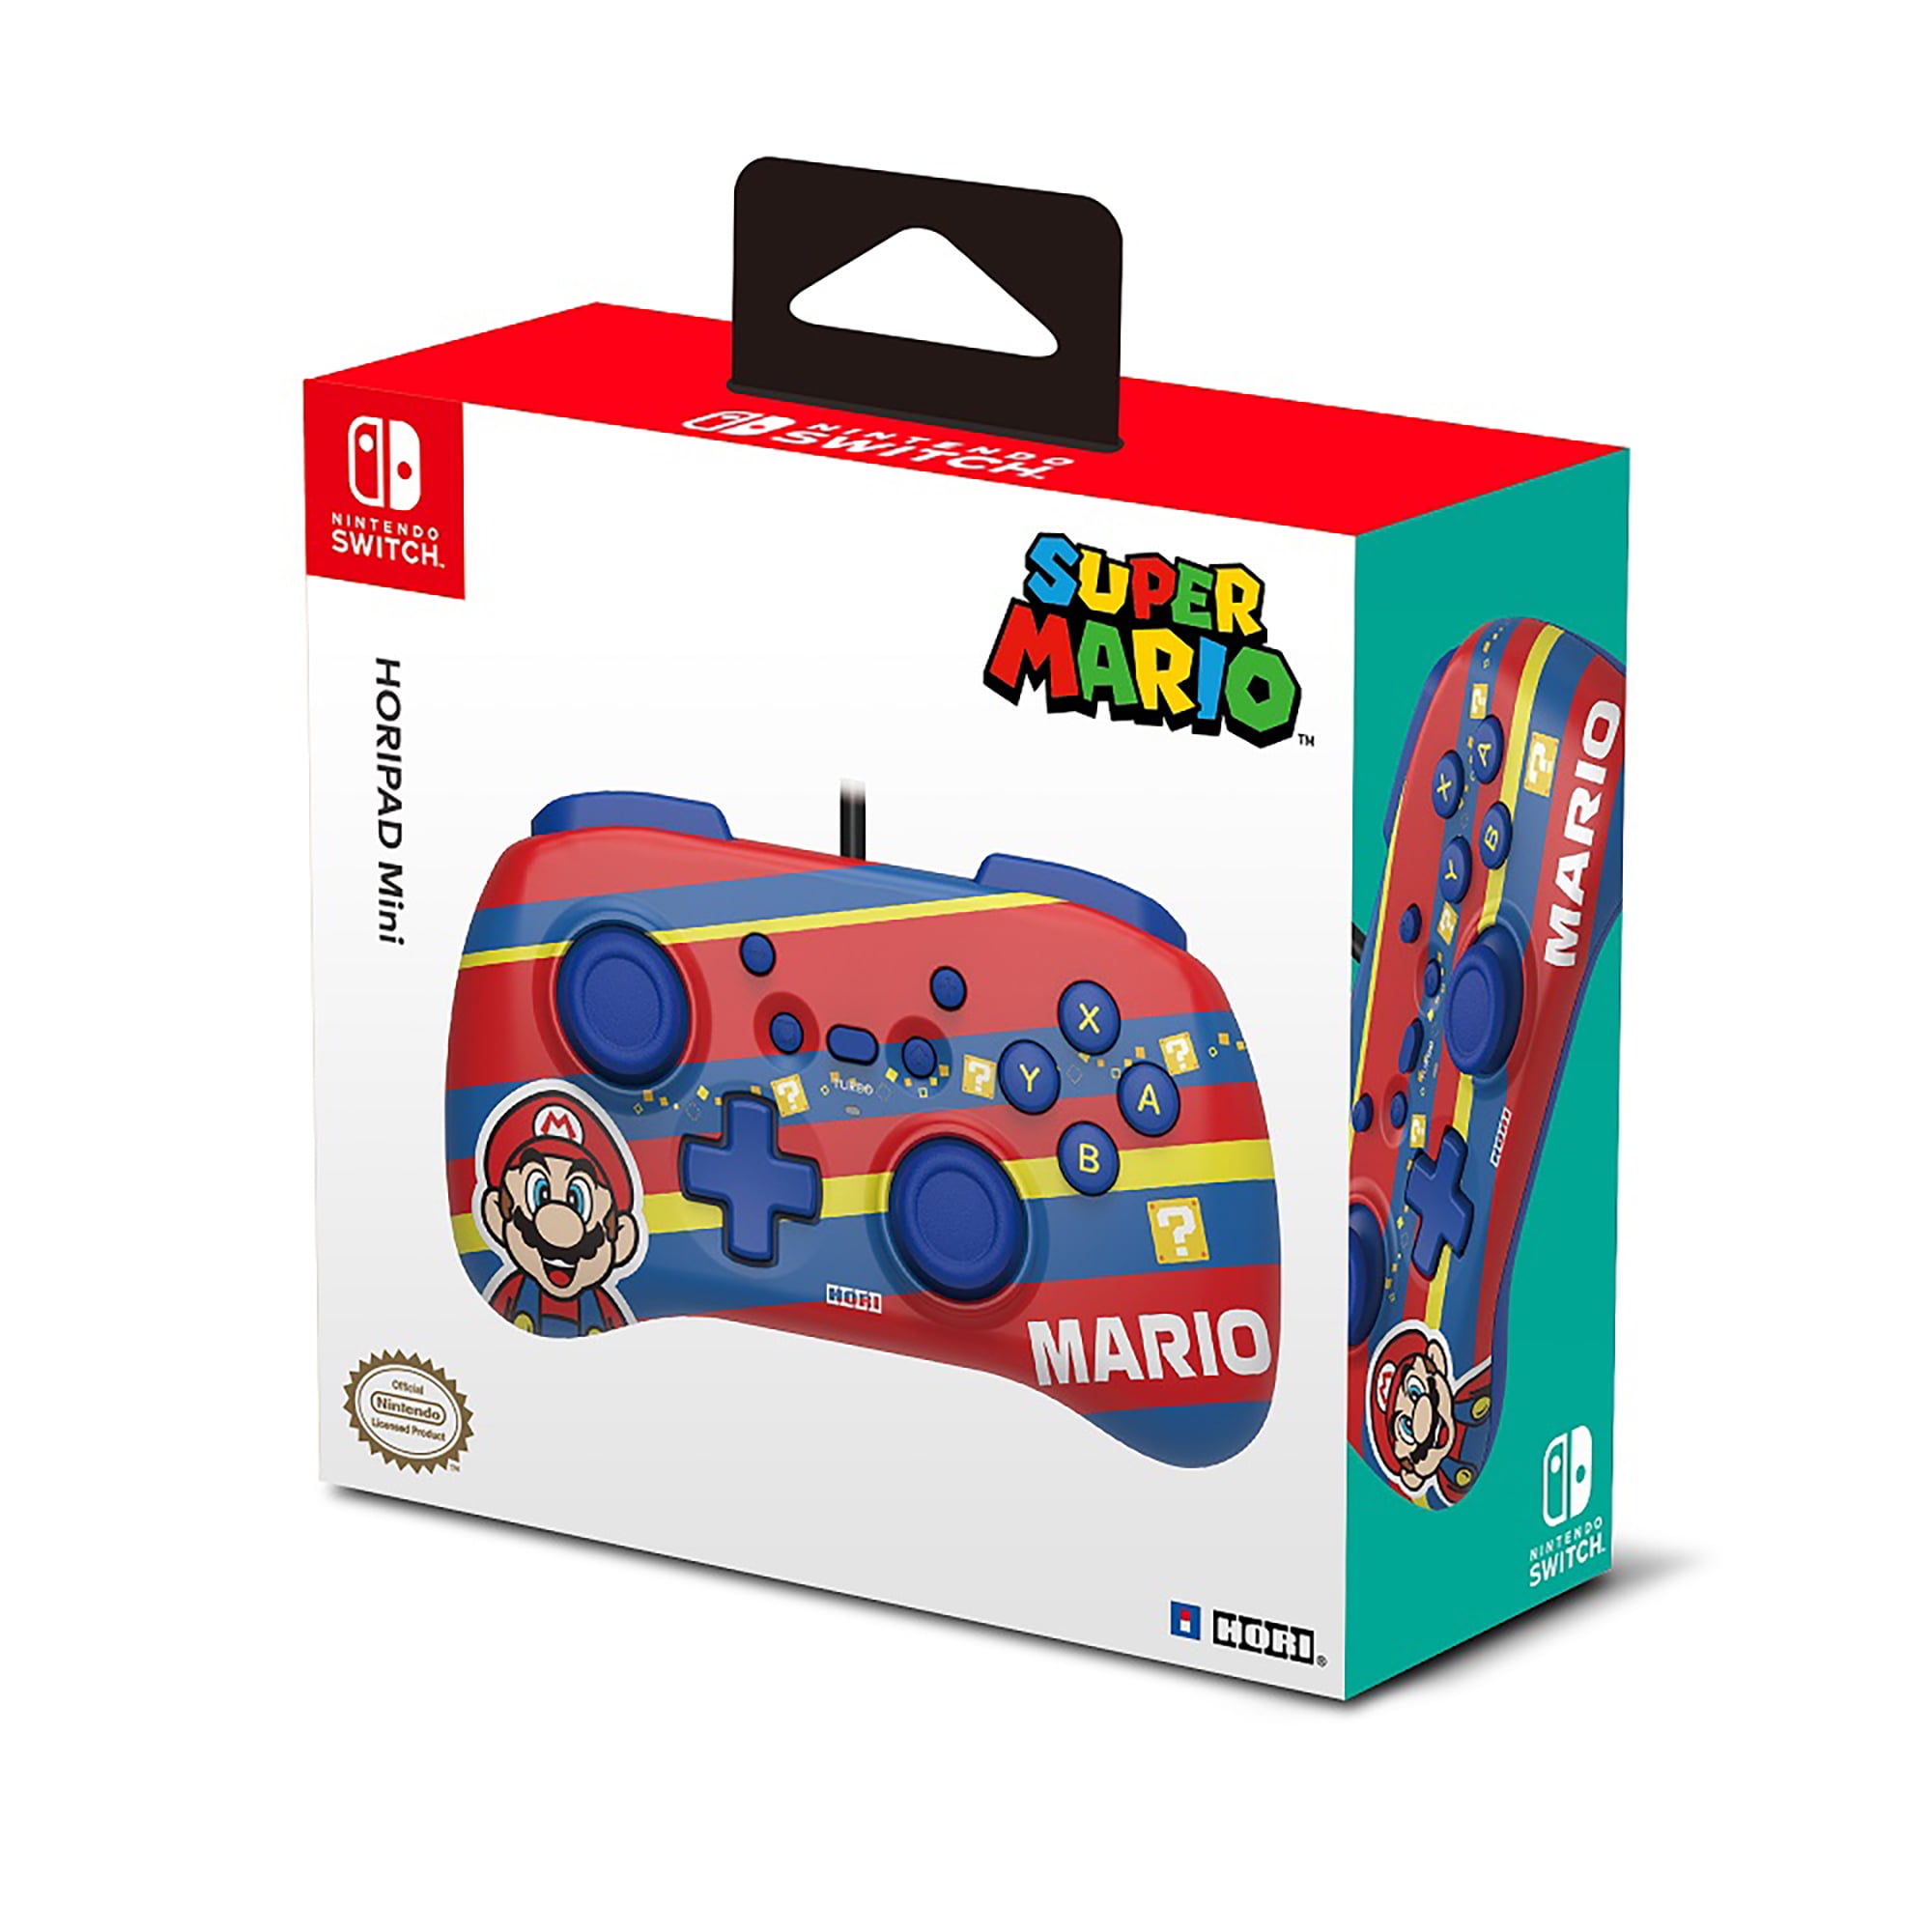 Official Nintendo Licensed D-Pad Joy-Con Left Mario Version for Nintendo  Switch